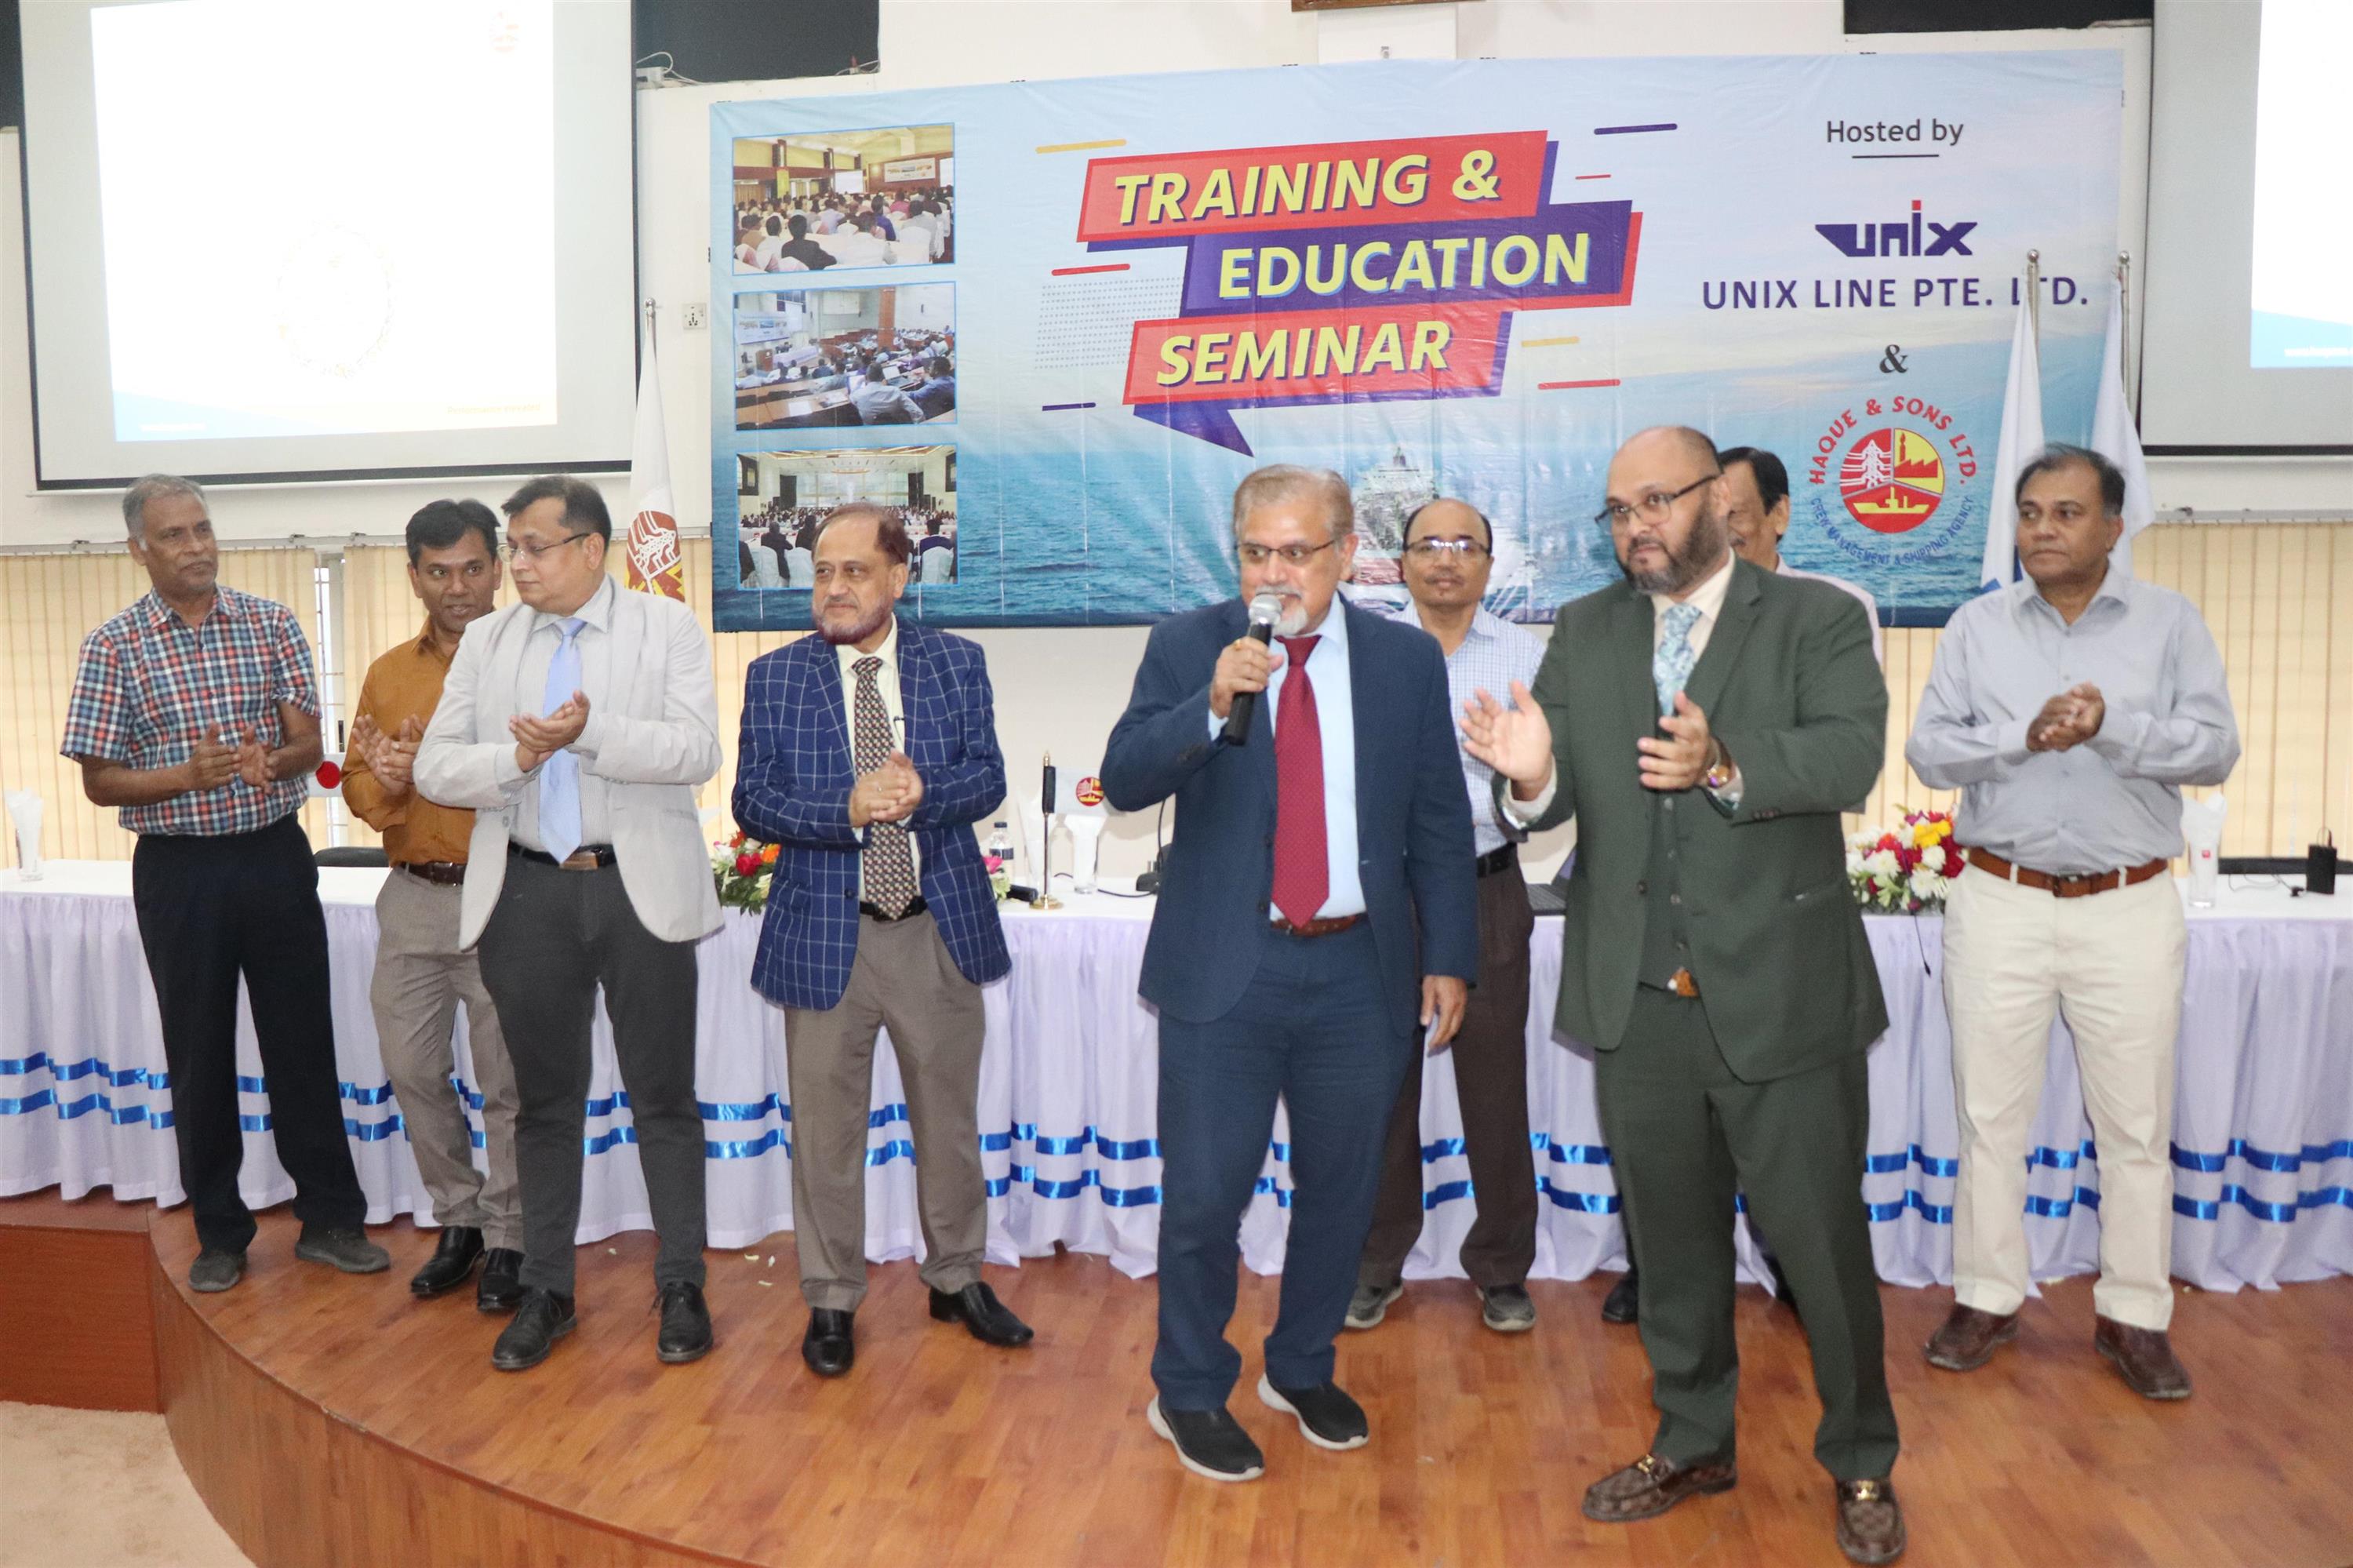 49th Training and Education Seminar of Unix Line Pte Ltd